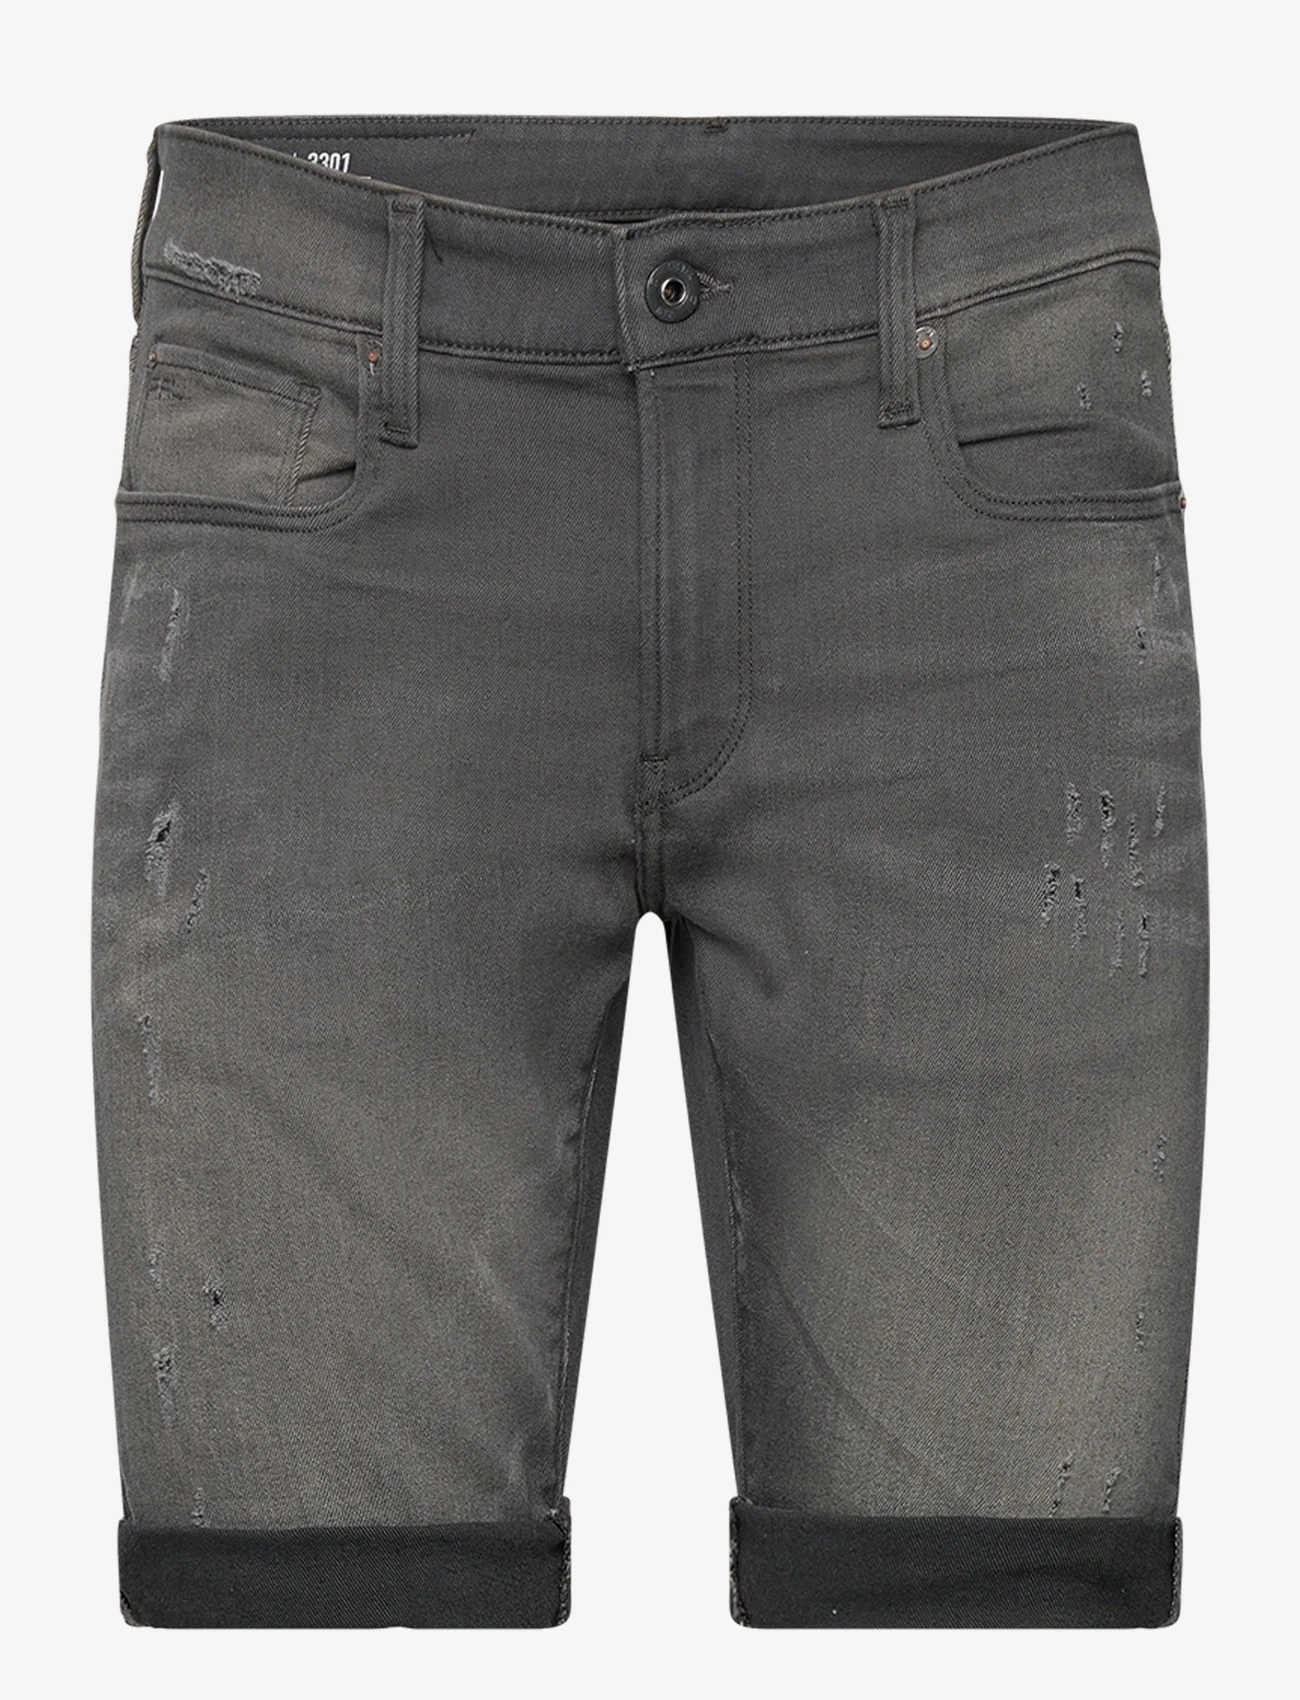 G-Star RAW - 3301 Slim Short - jeans shorts - lt aged destroy - 0